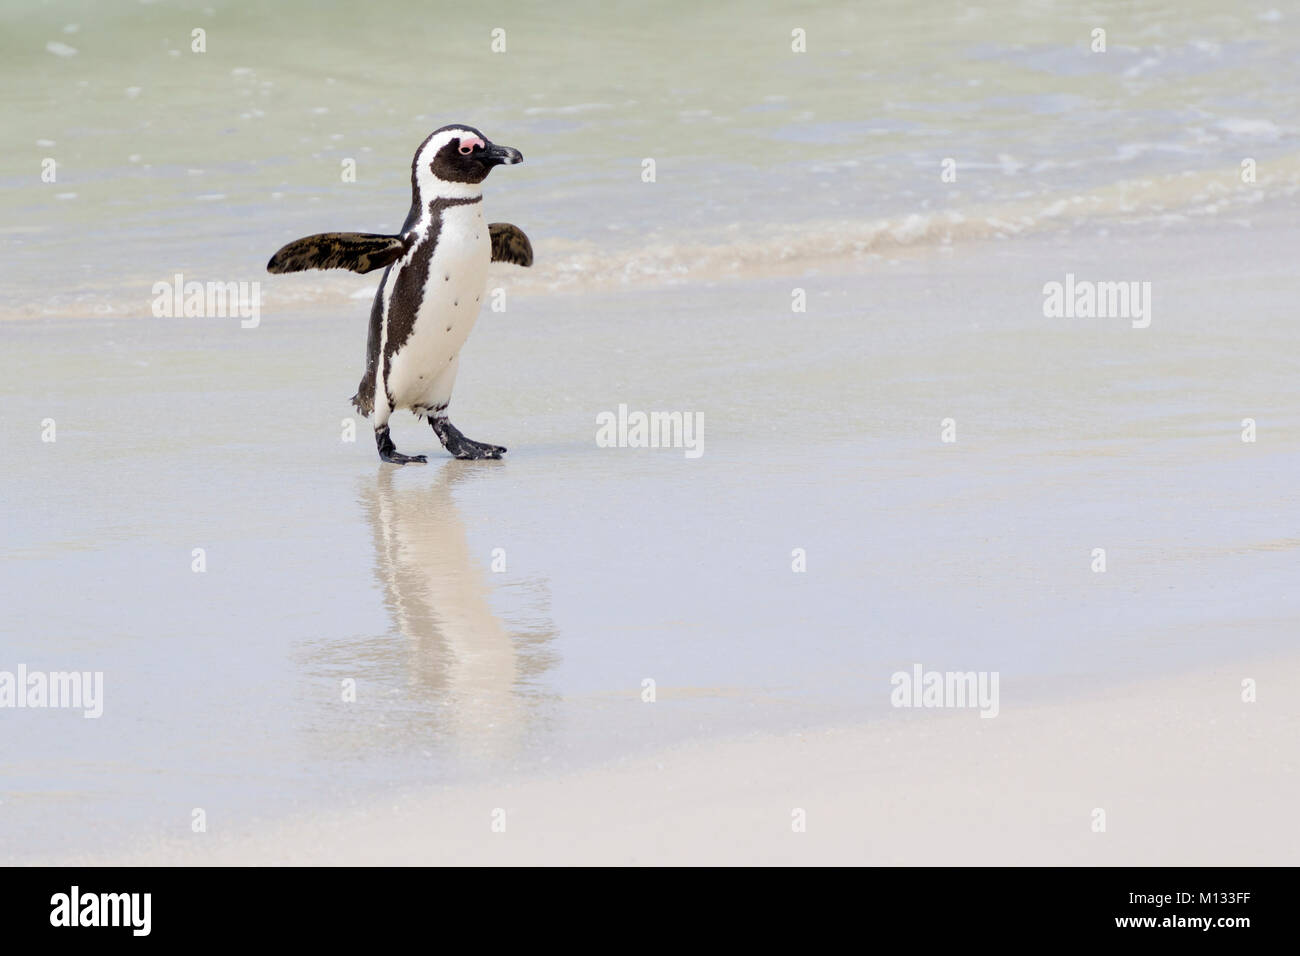 African penguin, jackass penguin, black-footed penguin (Spheniscus demersus), walking on beach, Boulder beach, South Africa Stock Photo